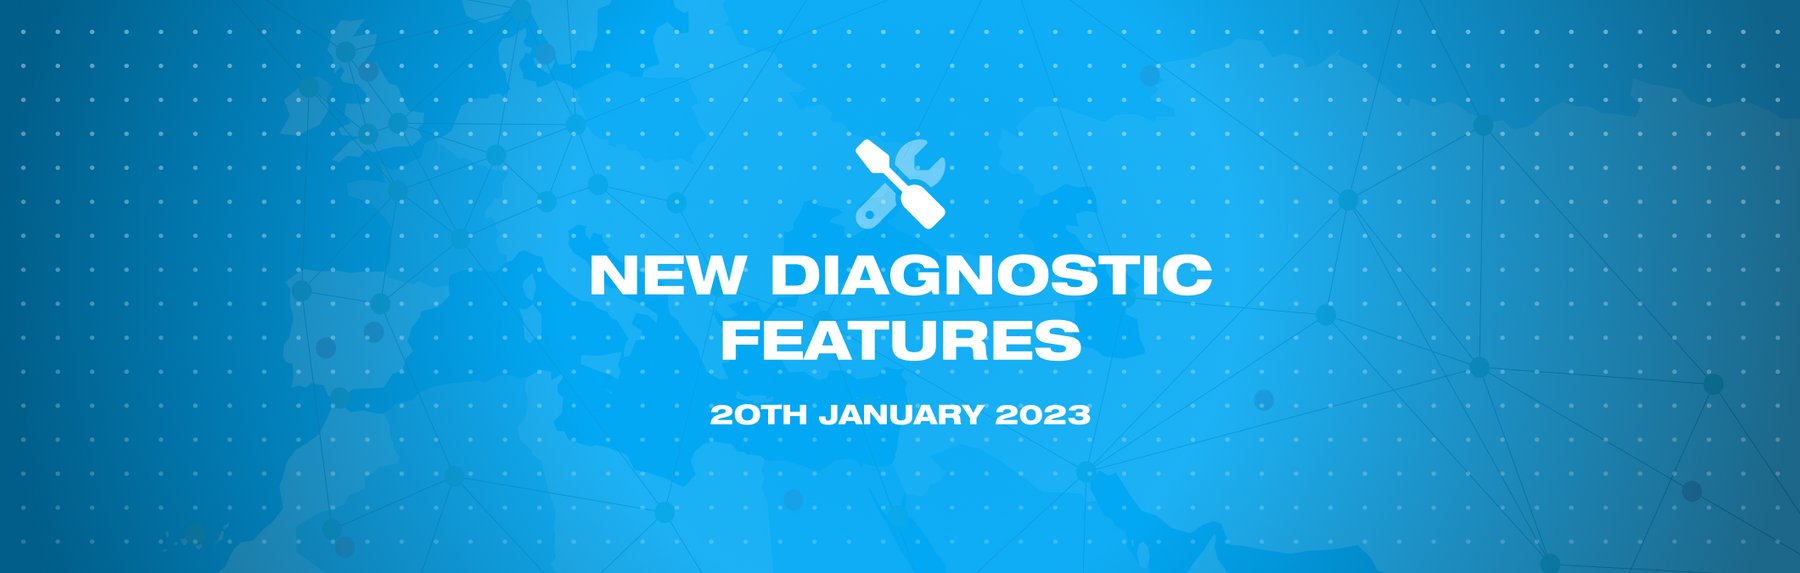 New Hotspot Diagnostic Features for Nebra and third-party hotspots